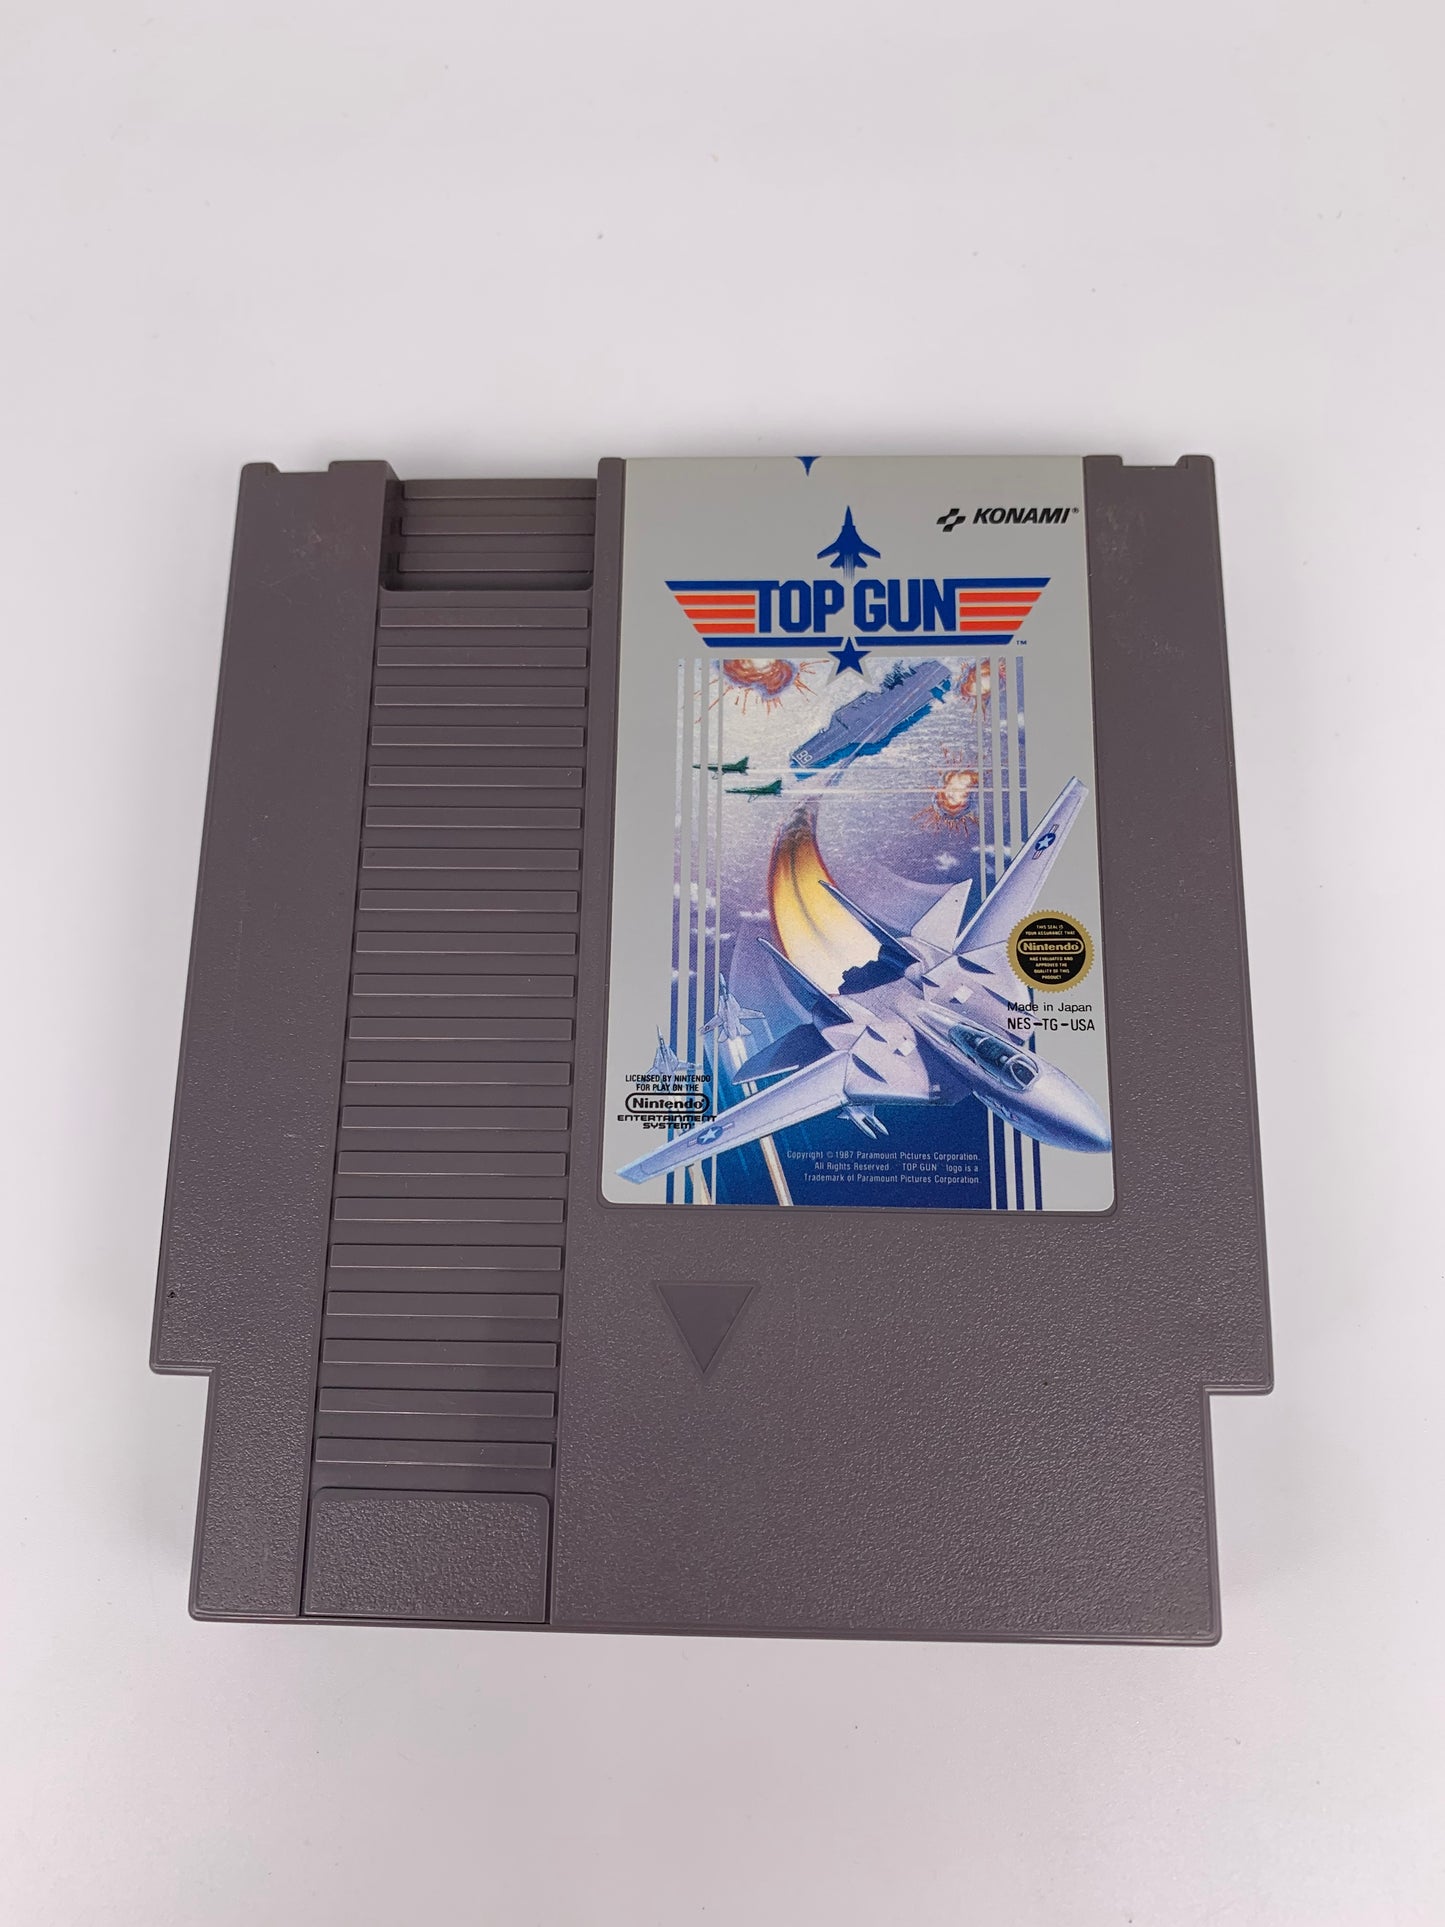 PiXEL-RETRO.COM : NINTENDO ENTERTAiNMENT SYSTEM (NES) GAME NTSC TOP GUN 